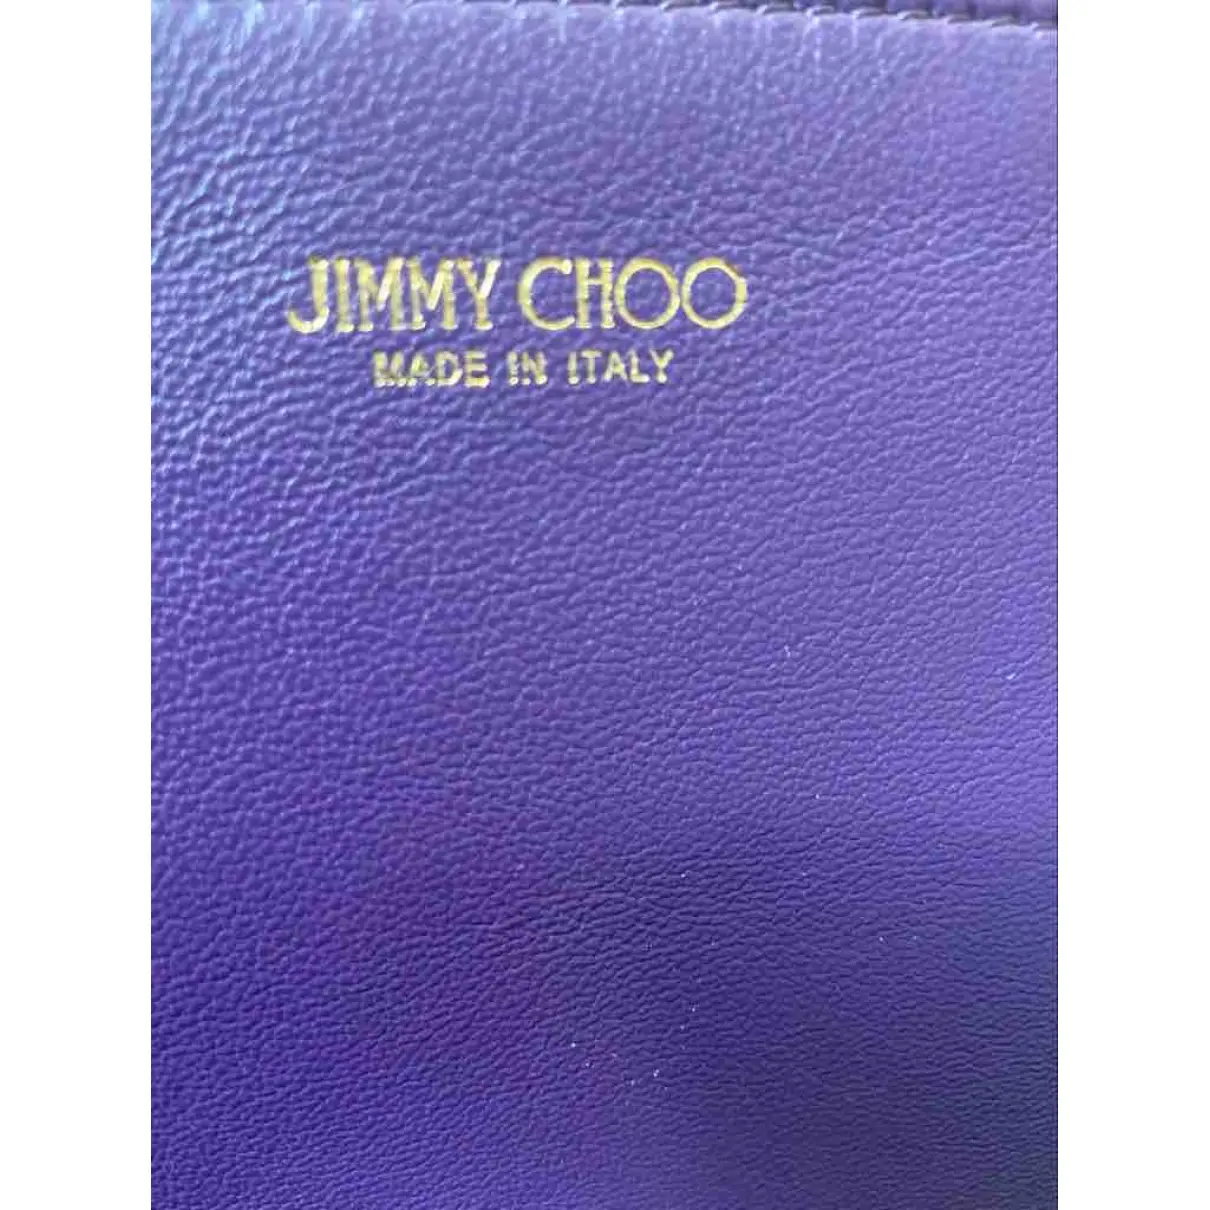 Cloth handbag Jimmy Choo